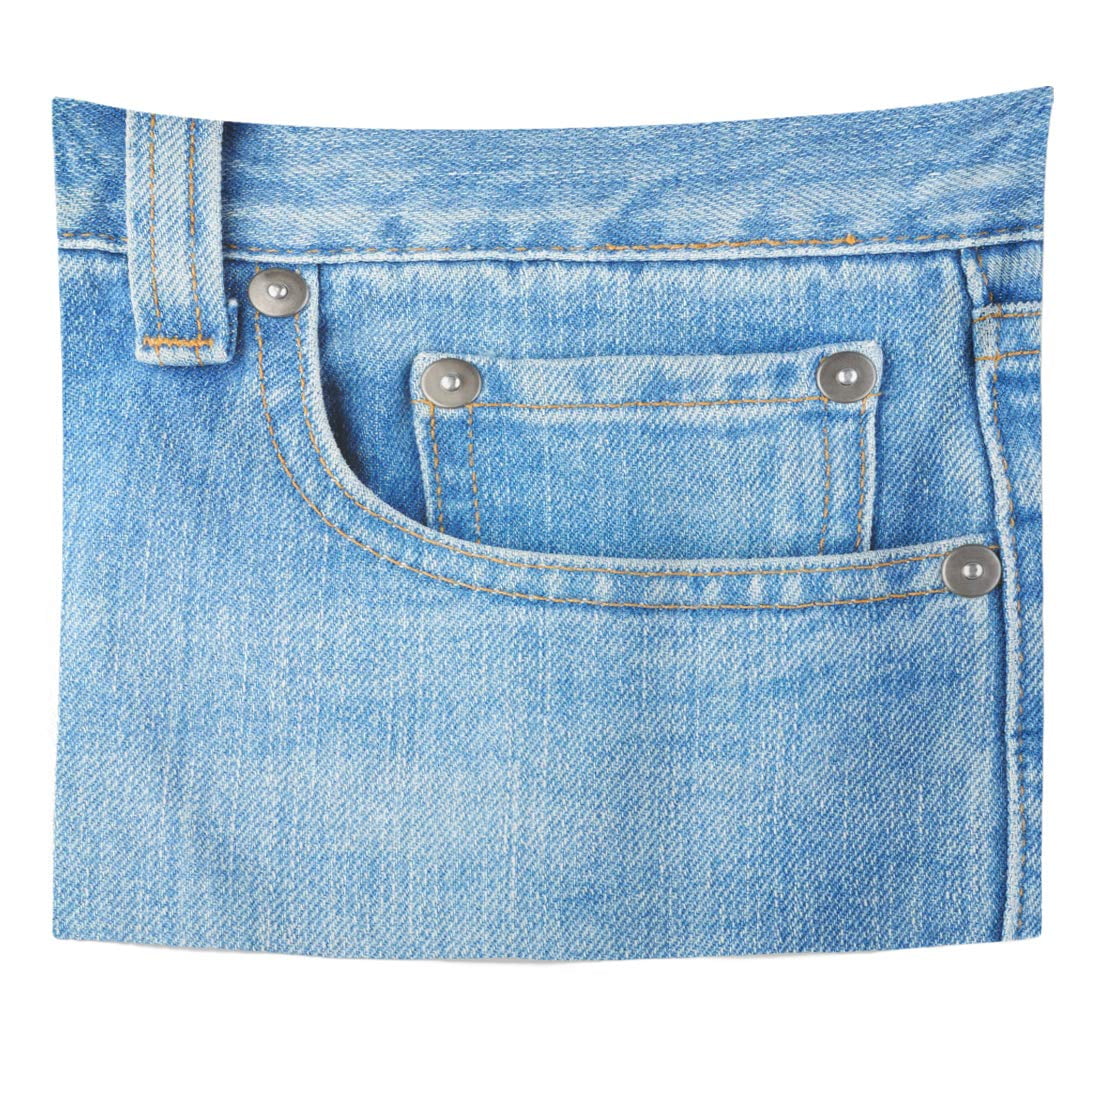 blue rivet jeans